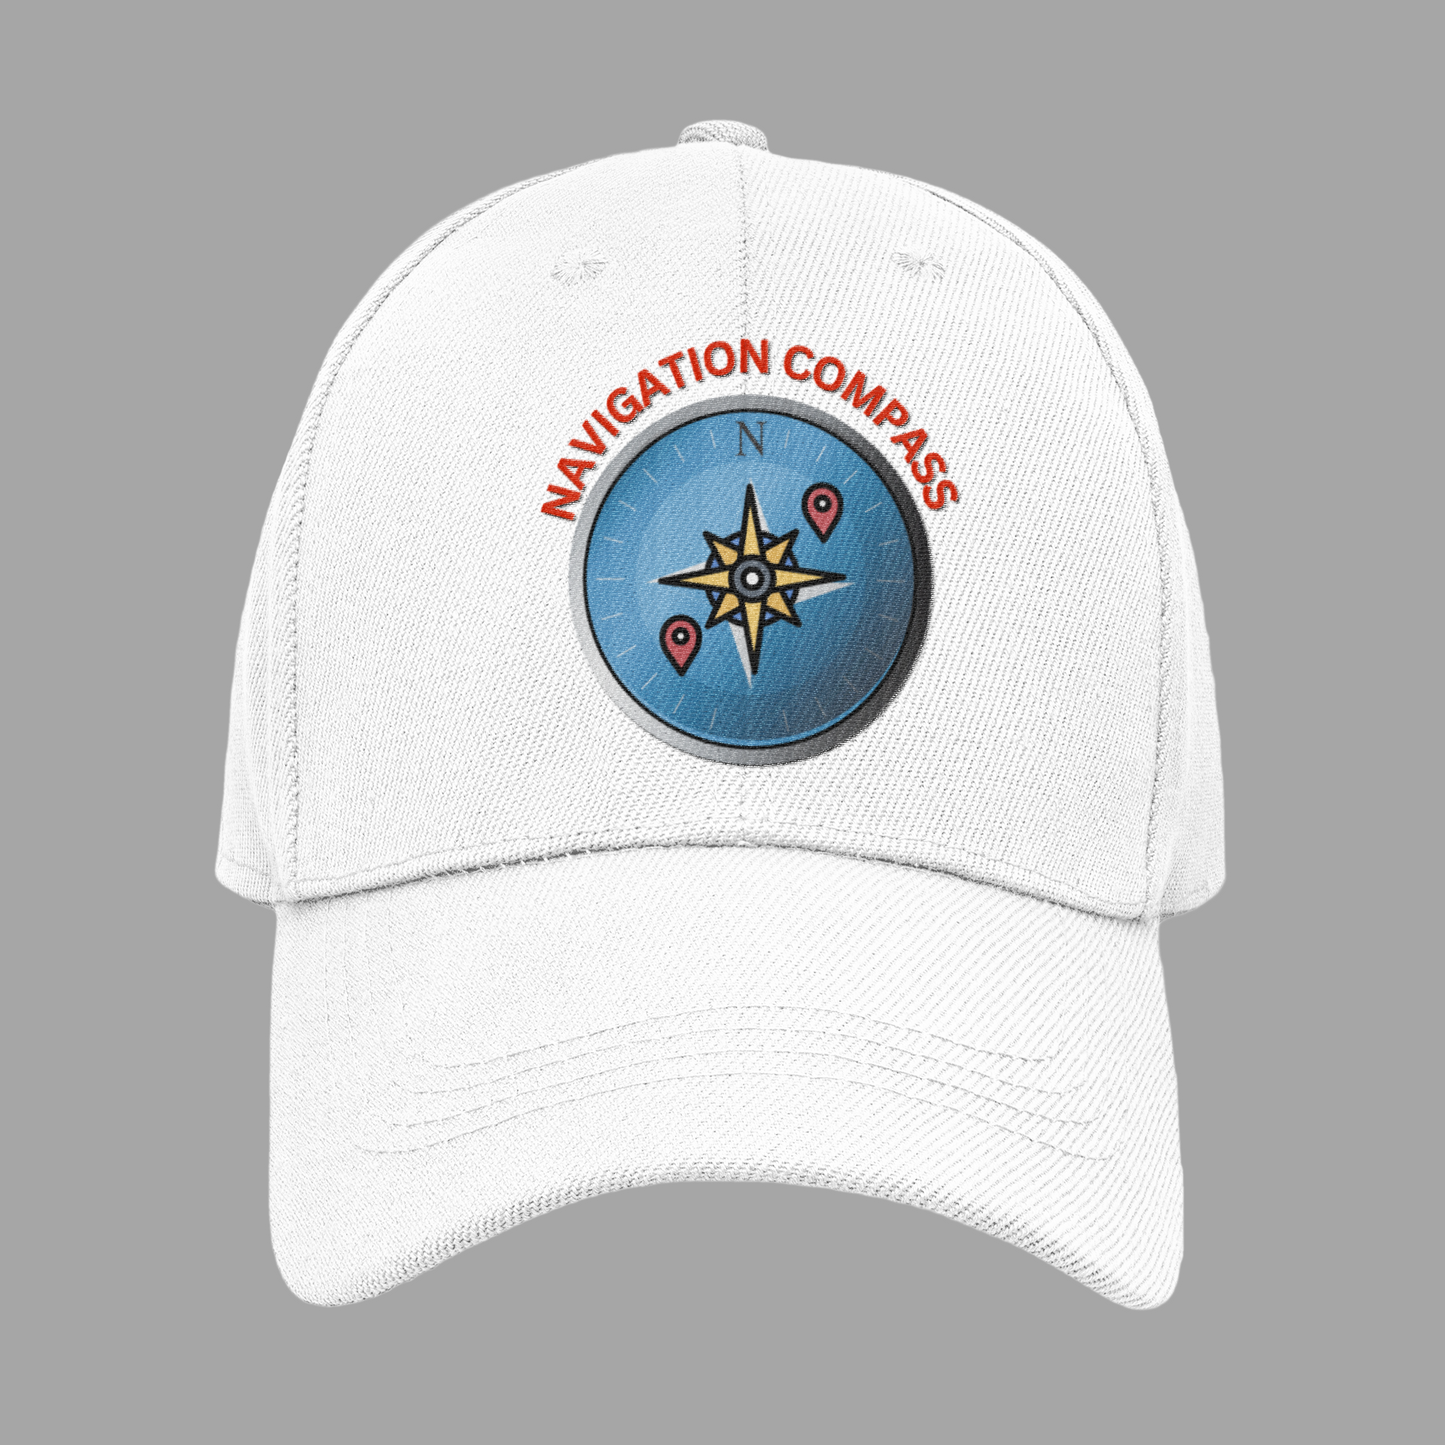 NAVIGATION COMPASS CAP